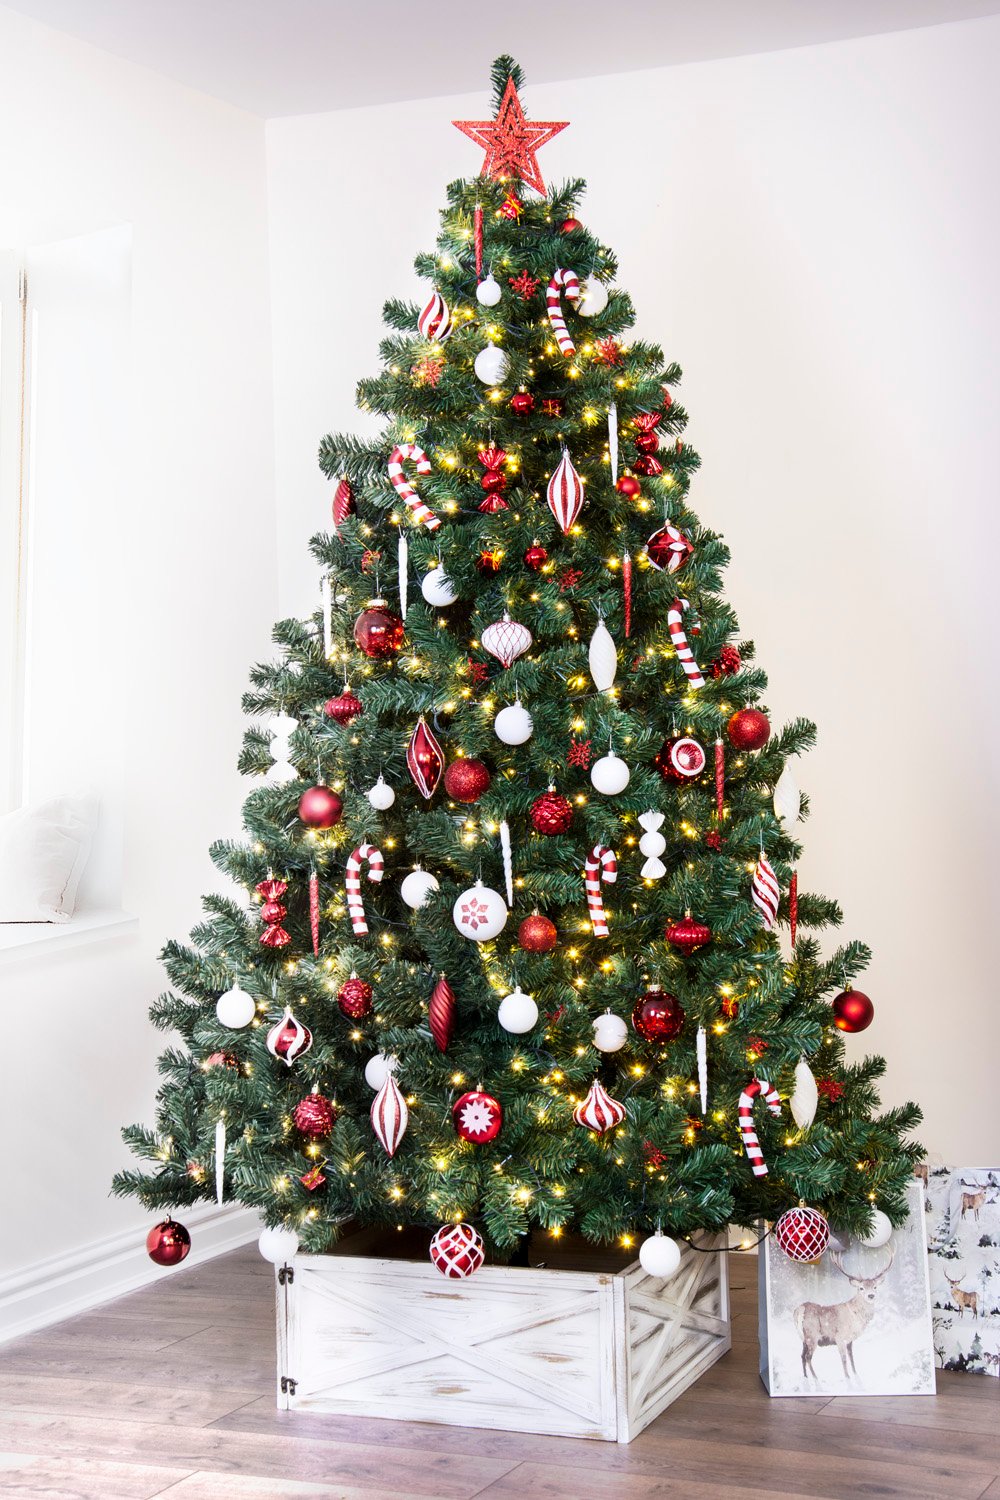 The 9ft Arbor Vitae Fir Tree | Christmas Tree World